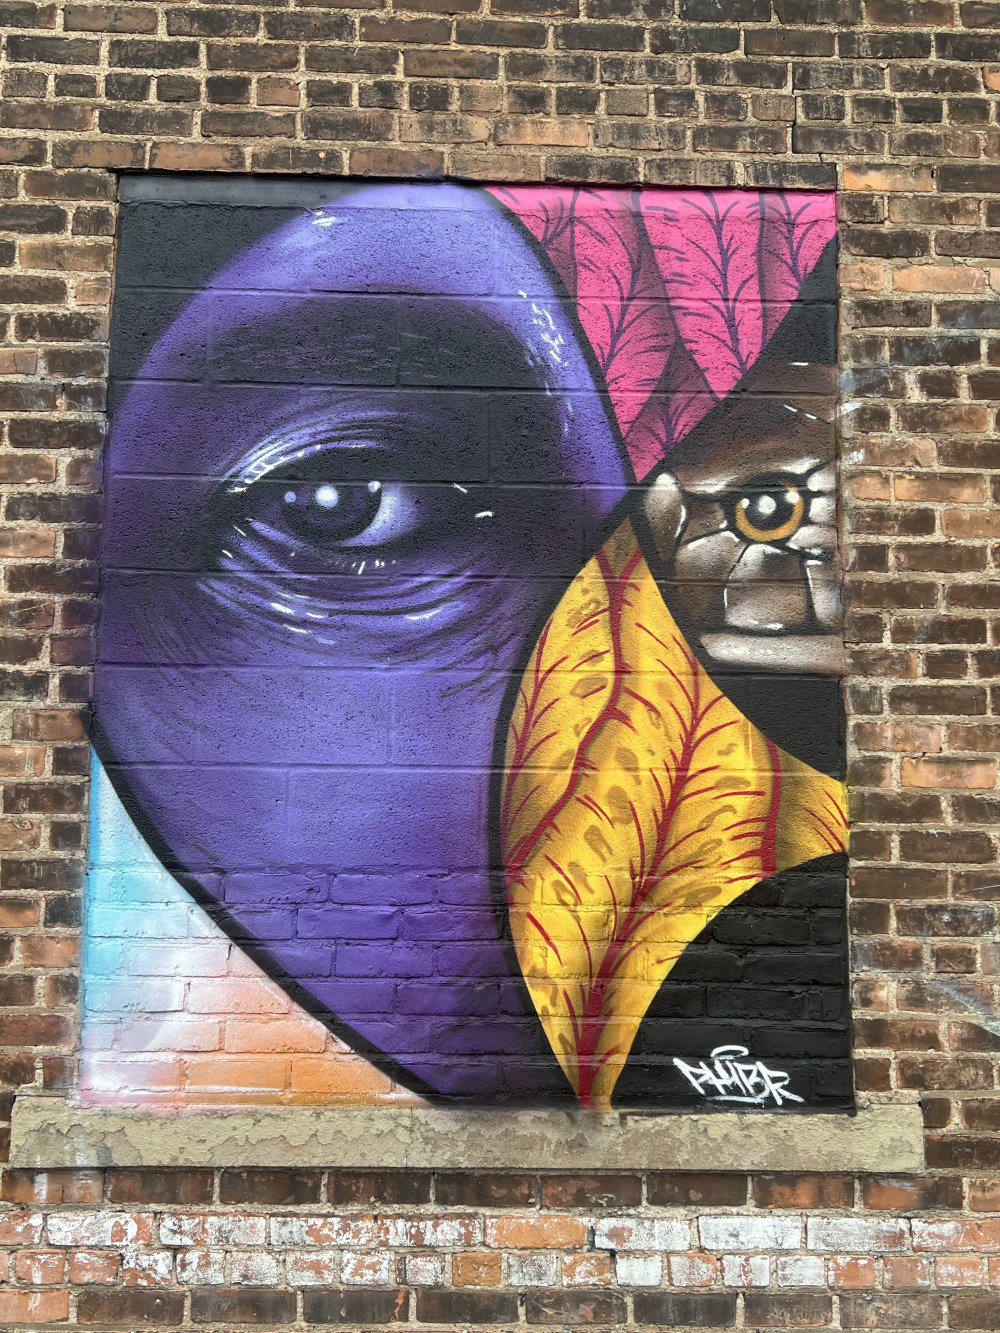 mural in Detroit by artist Phybr.